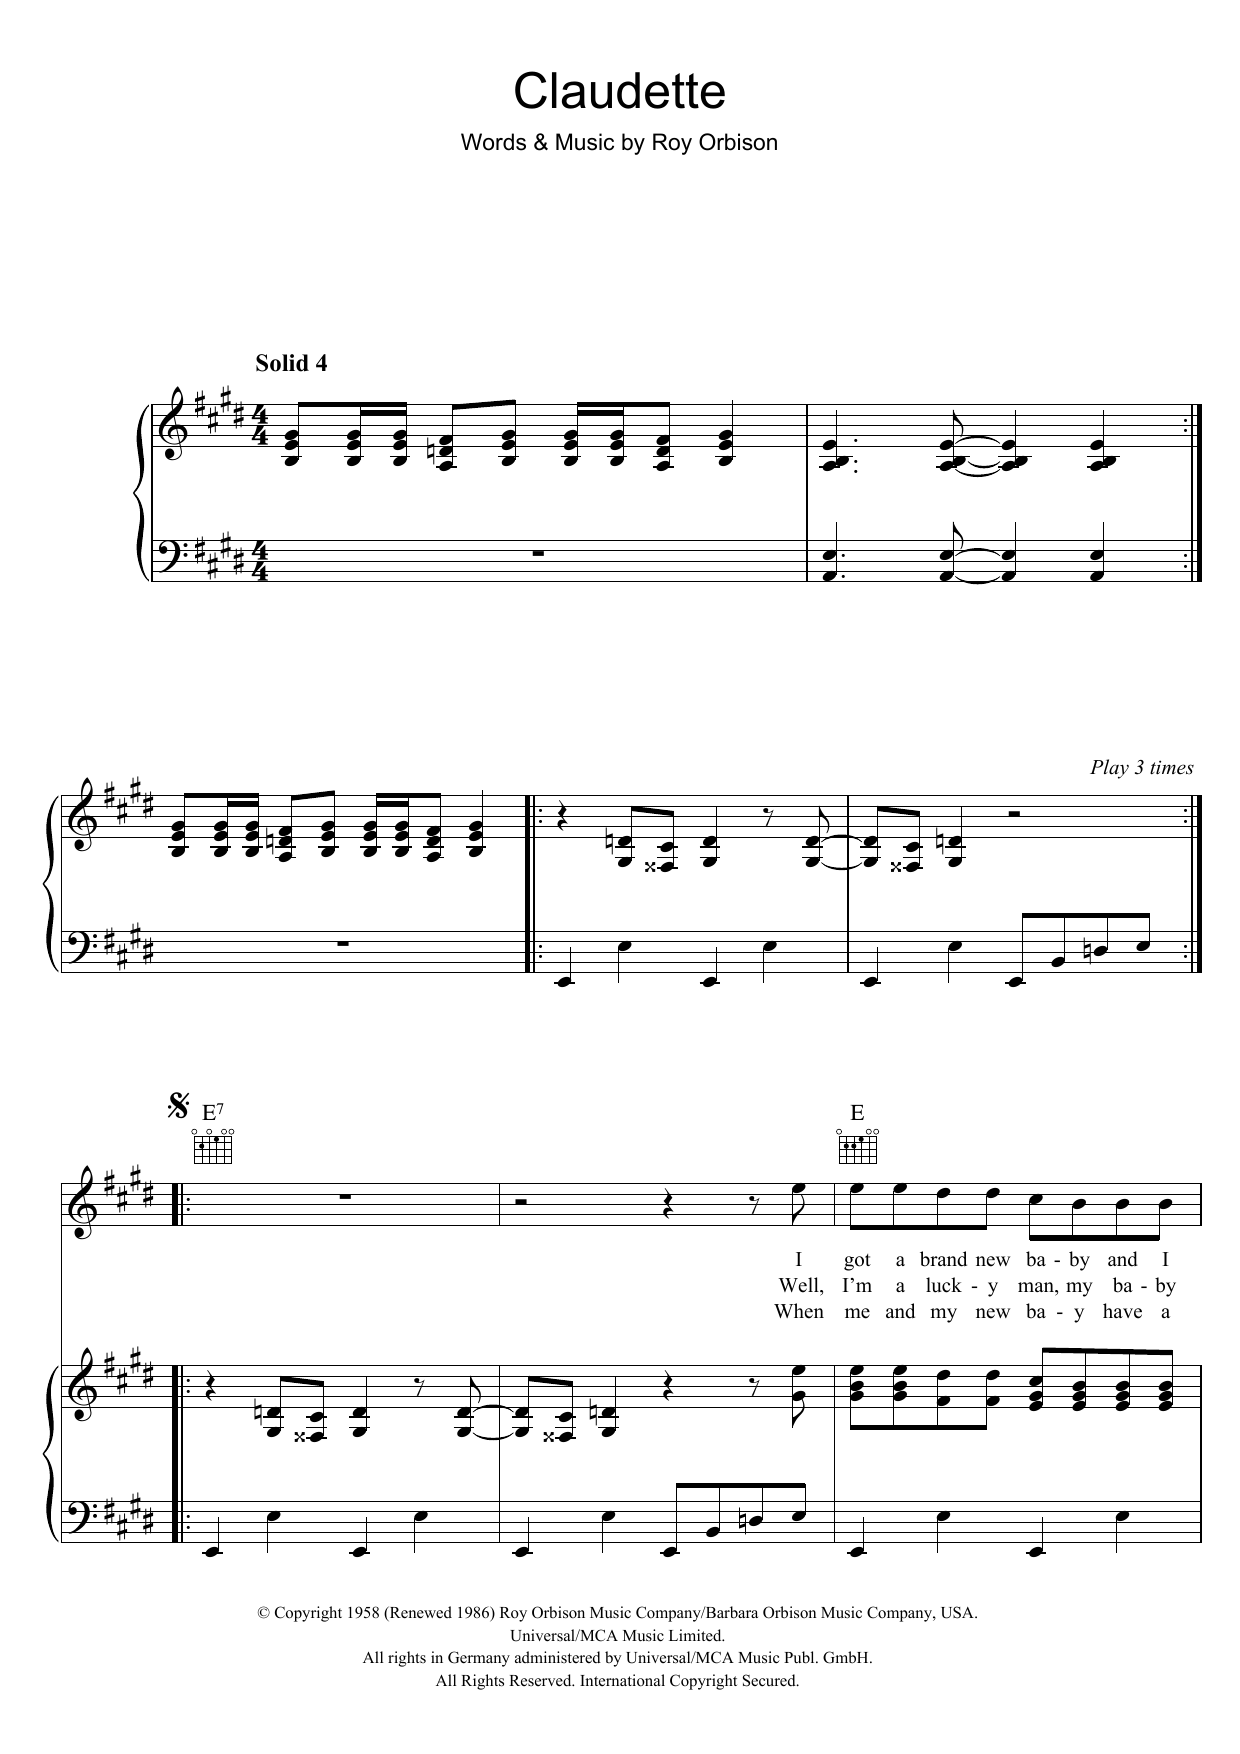 Roy Orbison Claudette Sheet Music Notes & Chords for Keyboard - Download or Print PDF